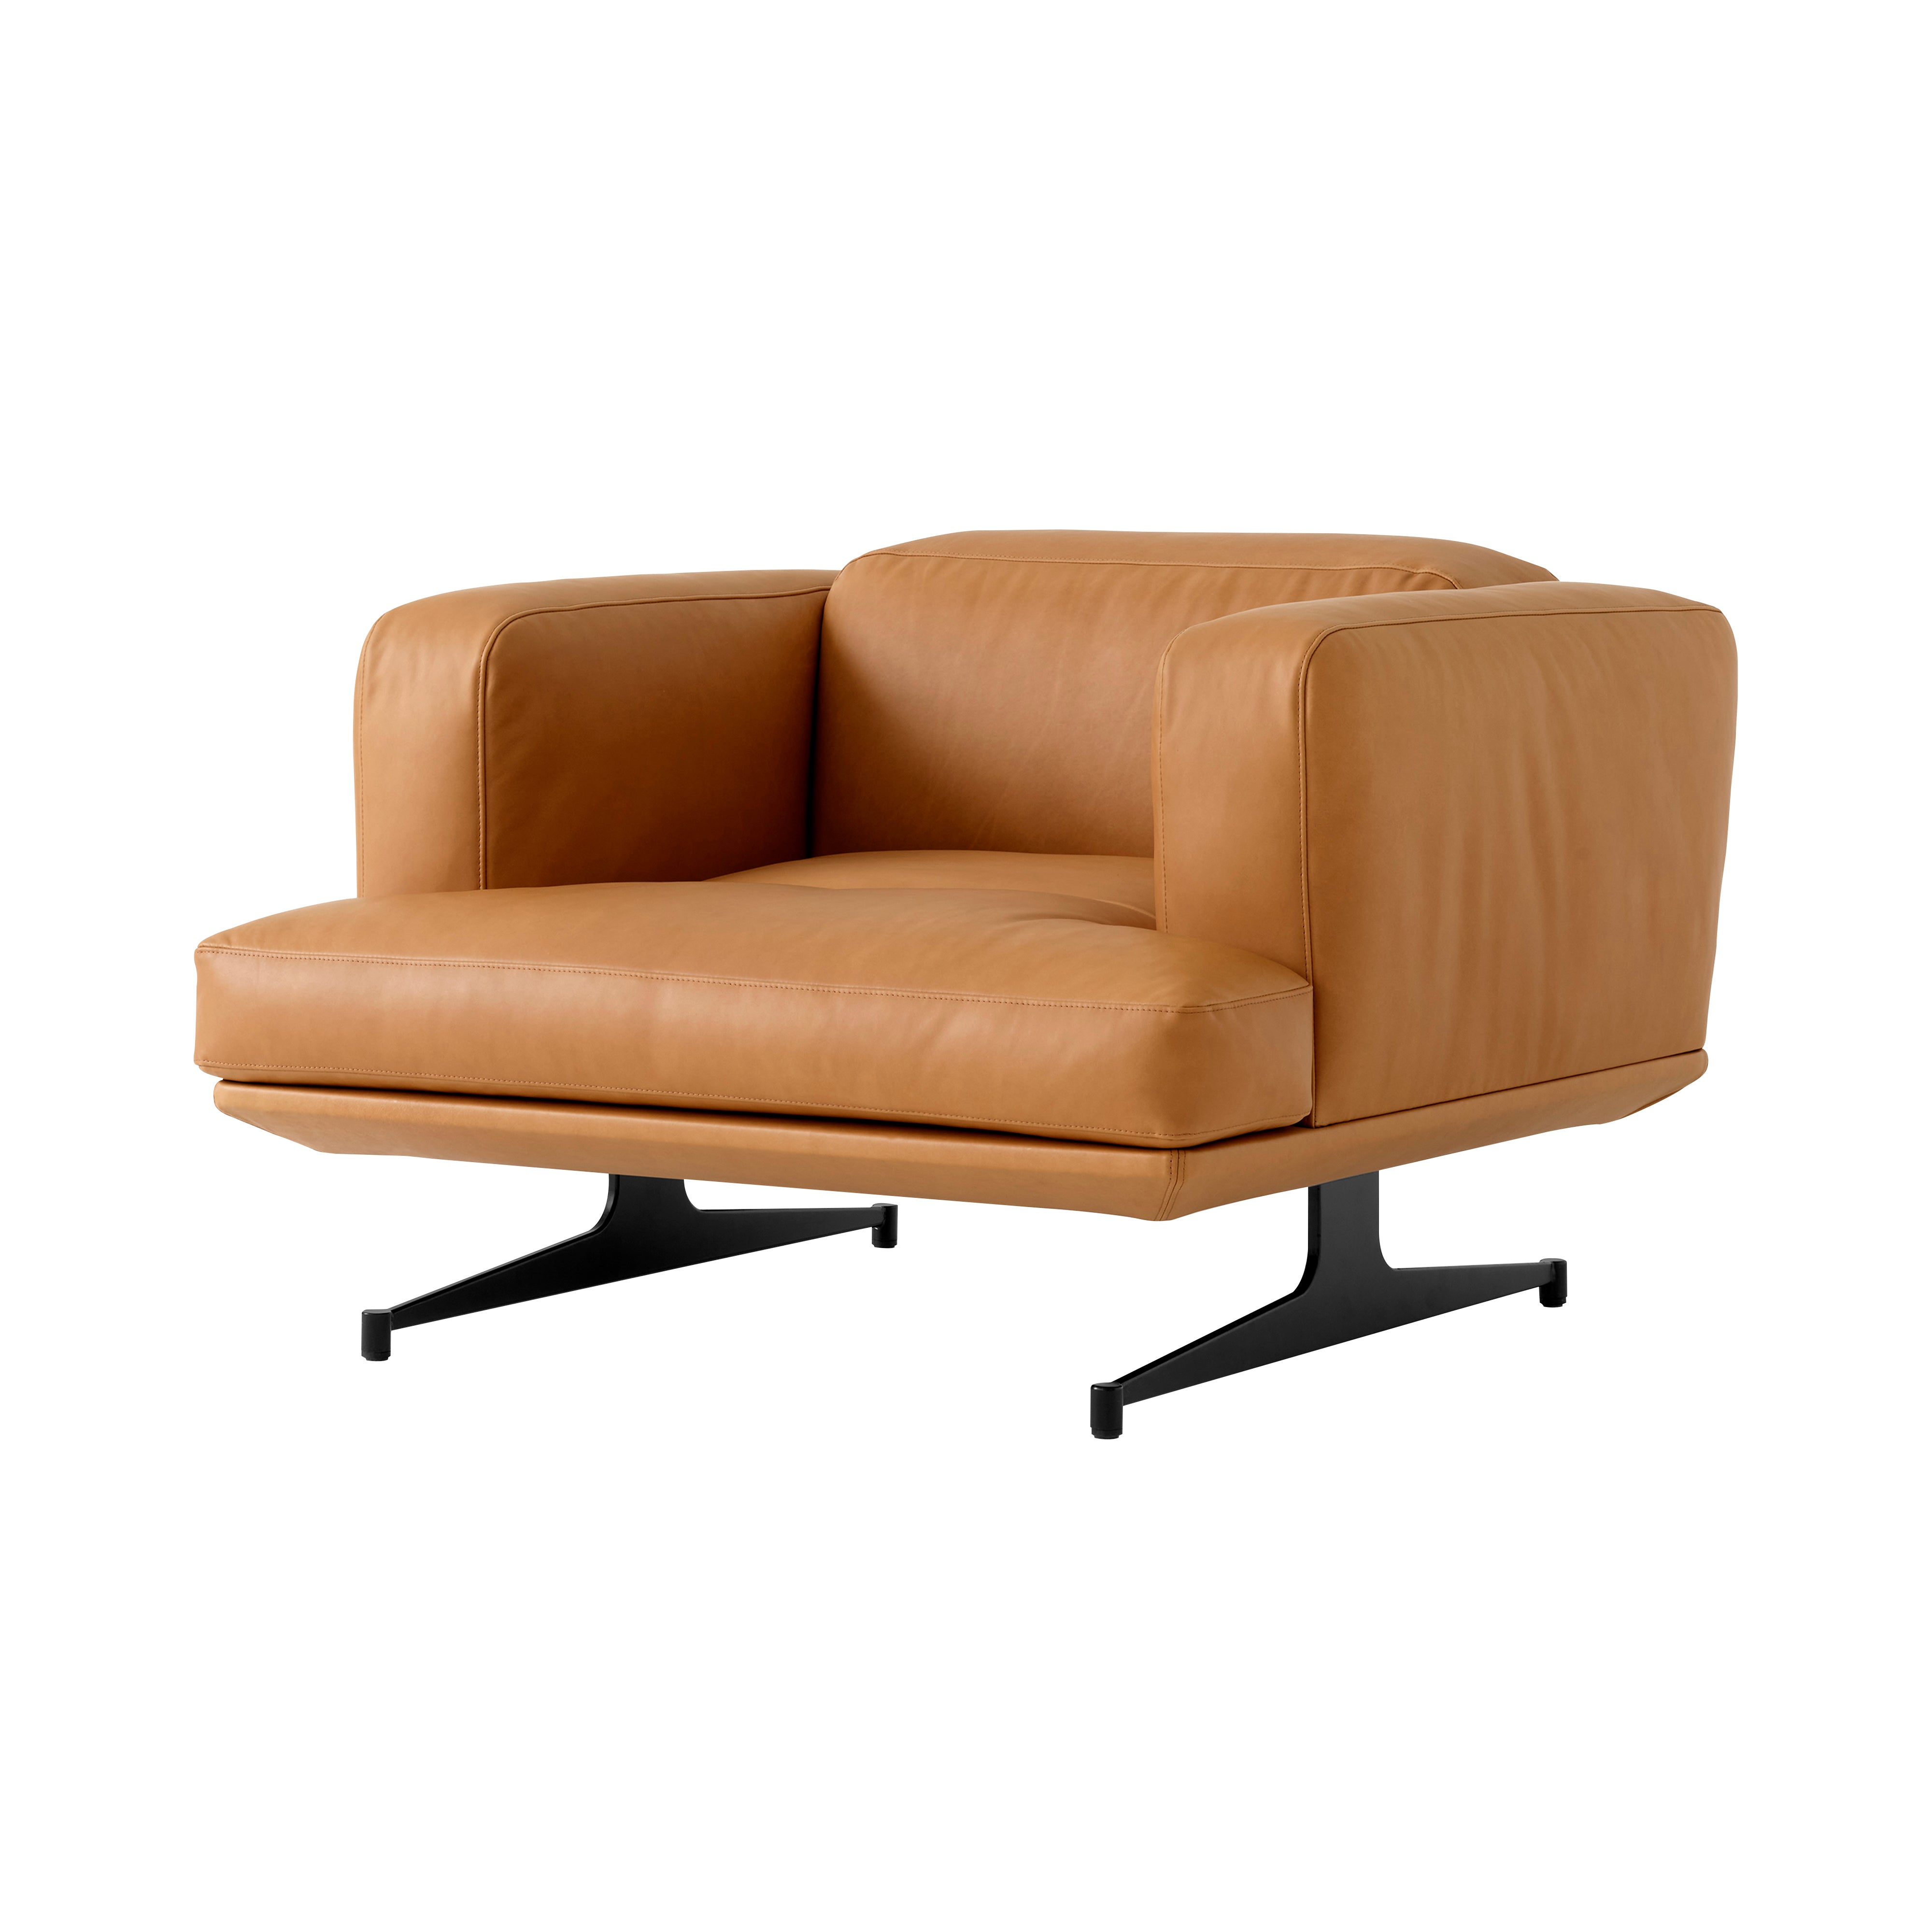 Inland Chair AV21: Warm Black + Cognac Noble Leather